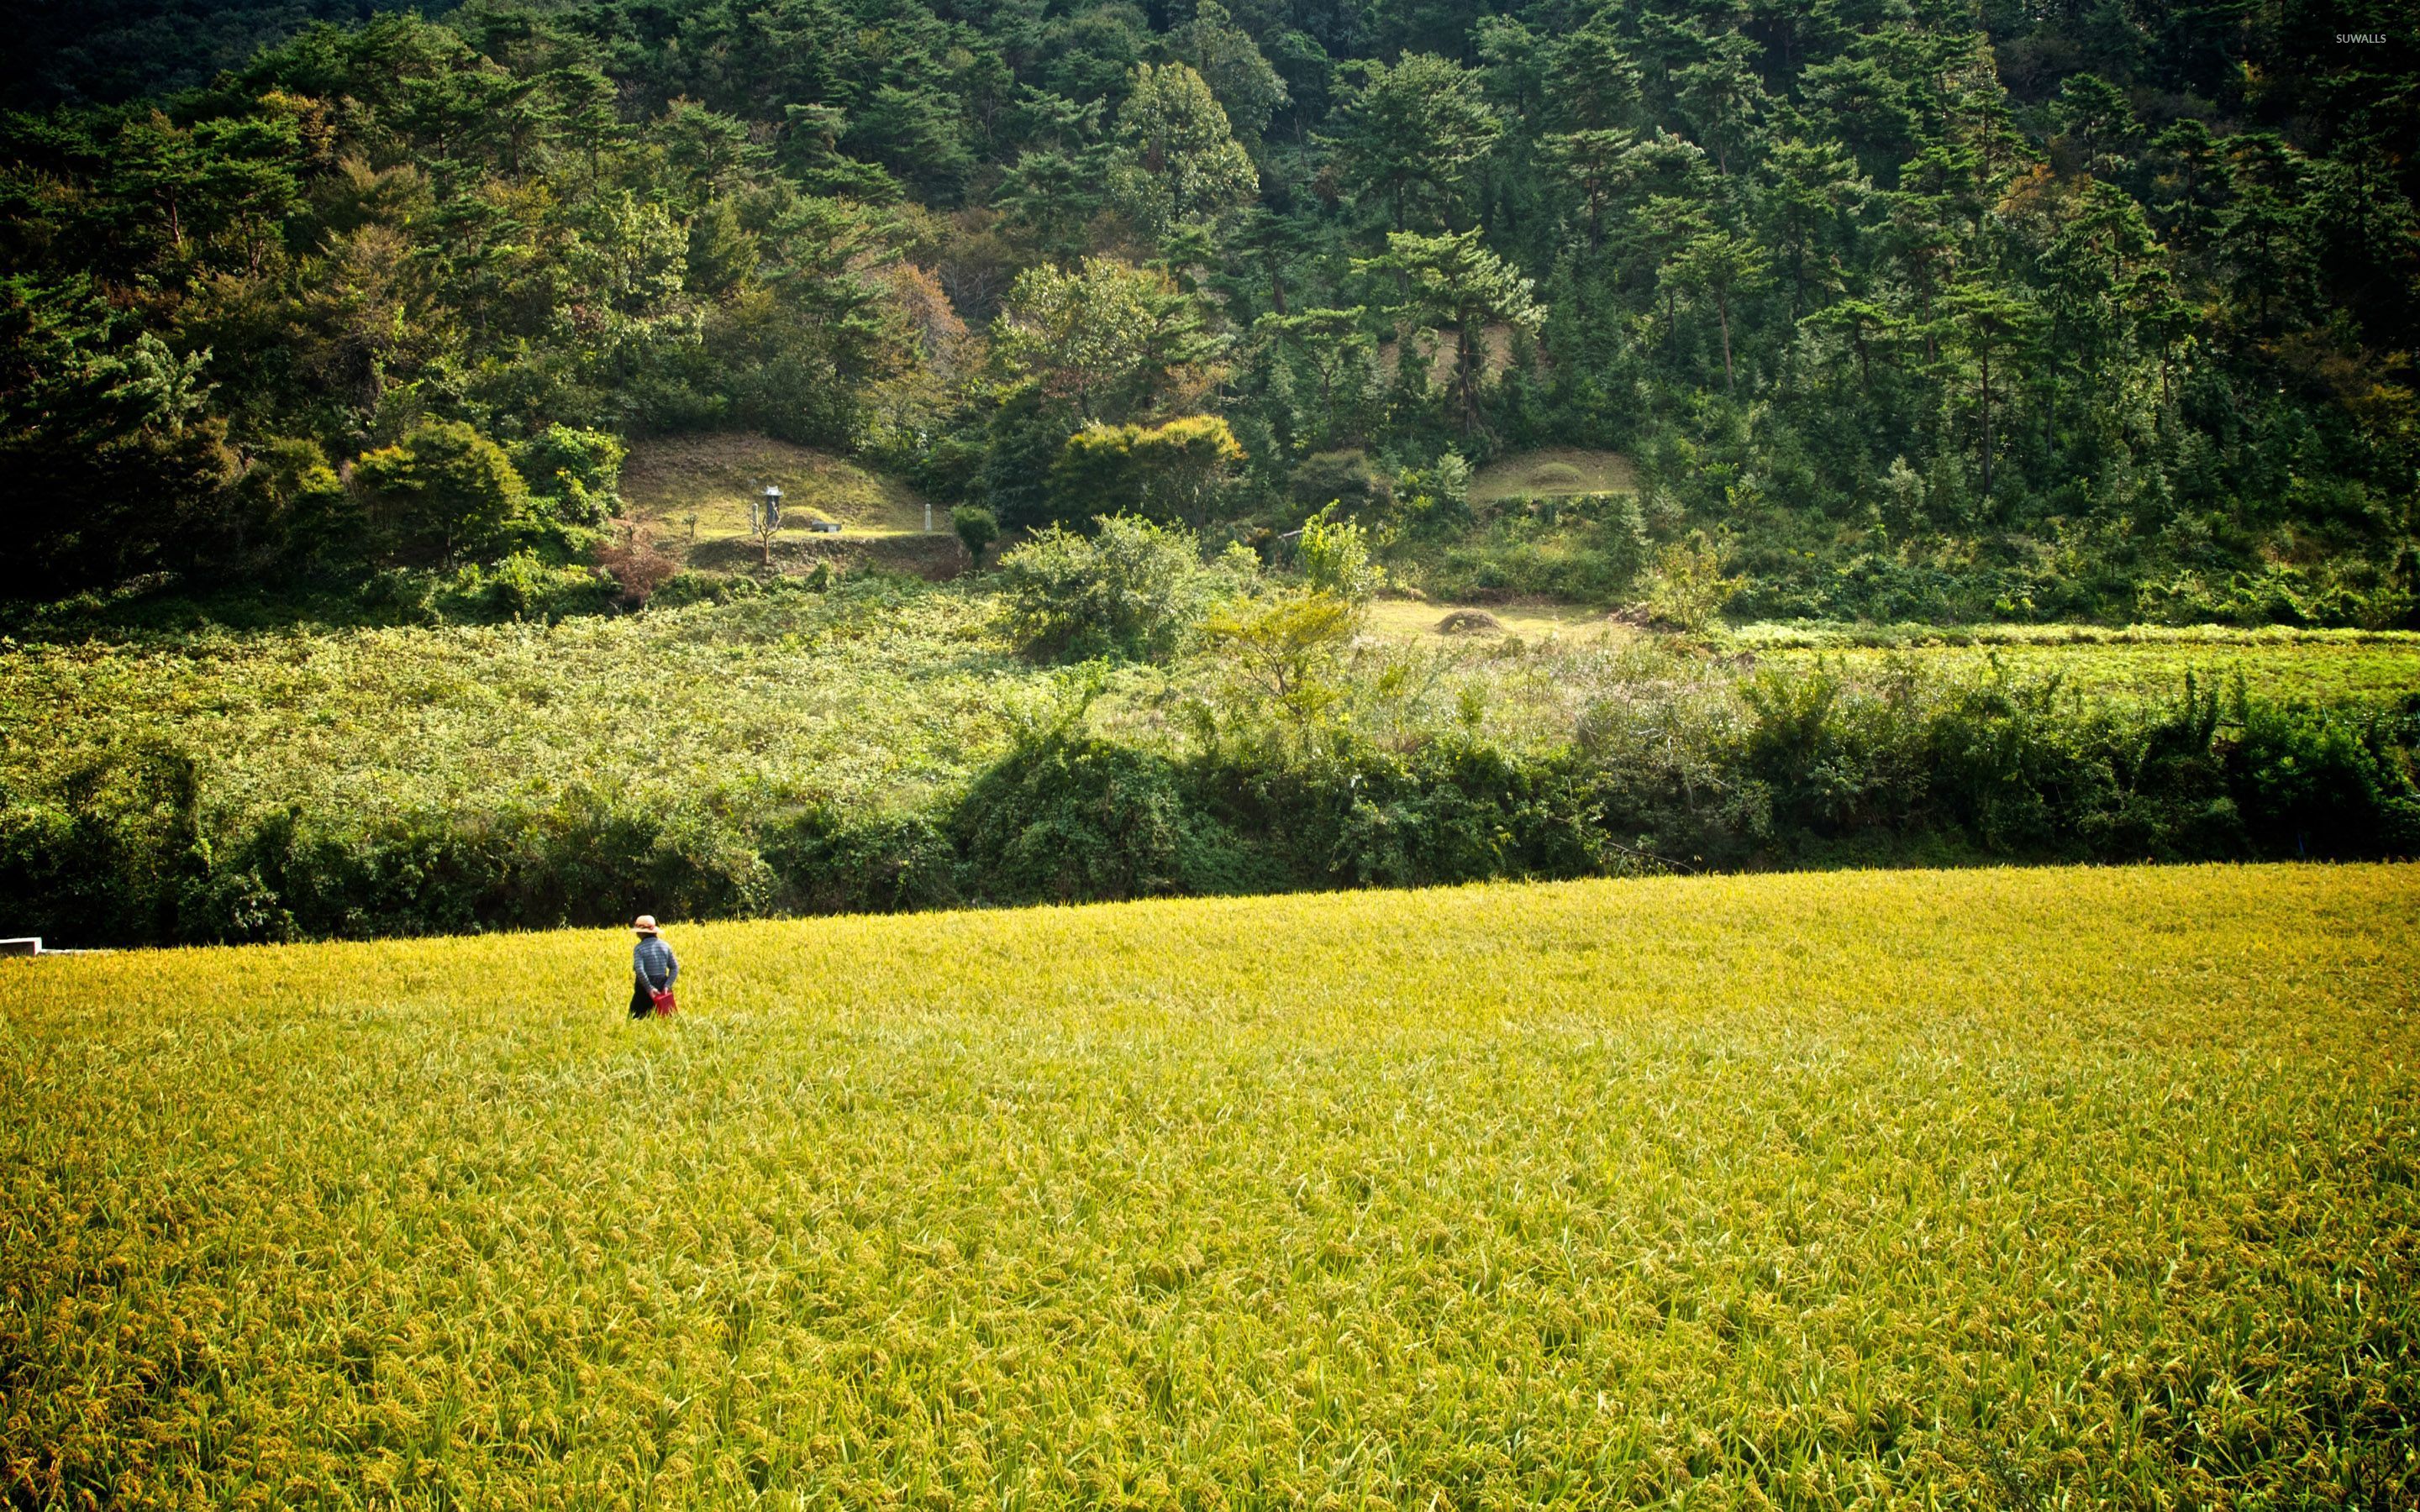 Korean Rice Field Wallpaper Nature Wallpapers 27747 HD Wallpapers Download Free Map Images Wallpaper [wallpaper376.blogspot.com]